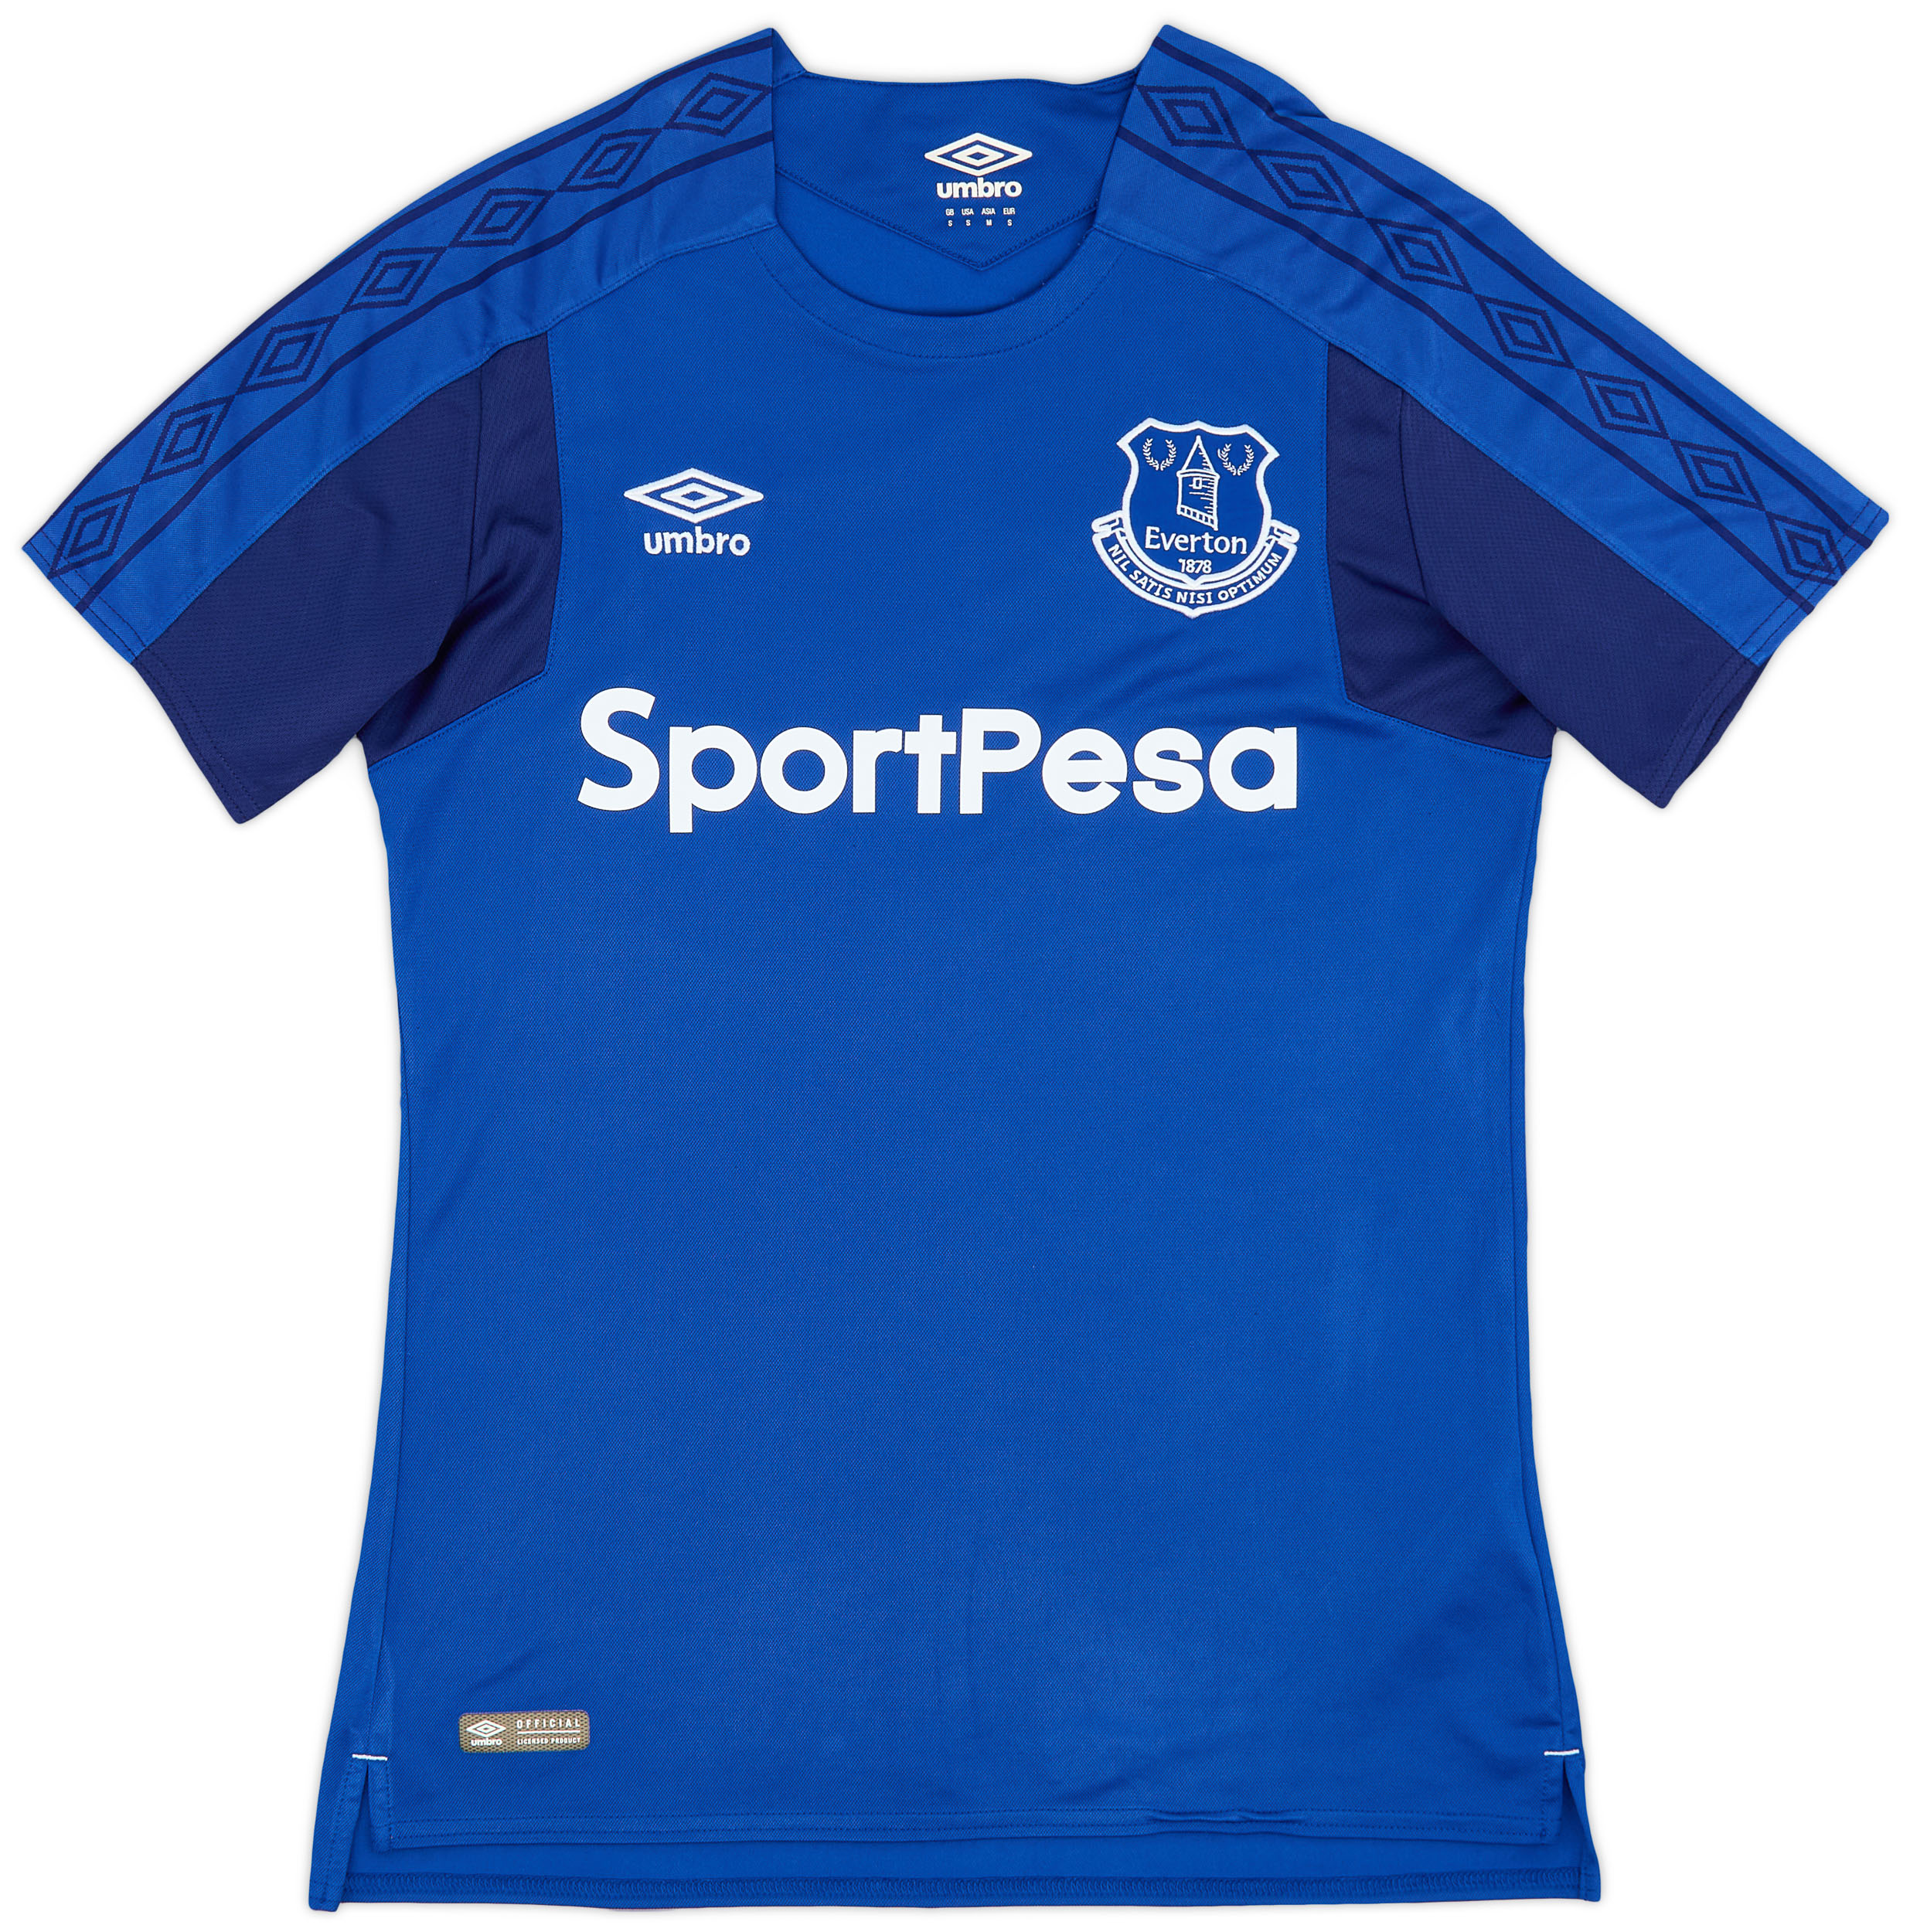 2017-18 Everton Home Shirt - 4/10 - ()